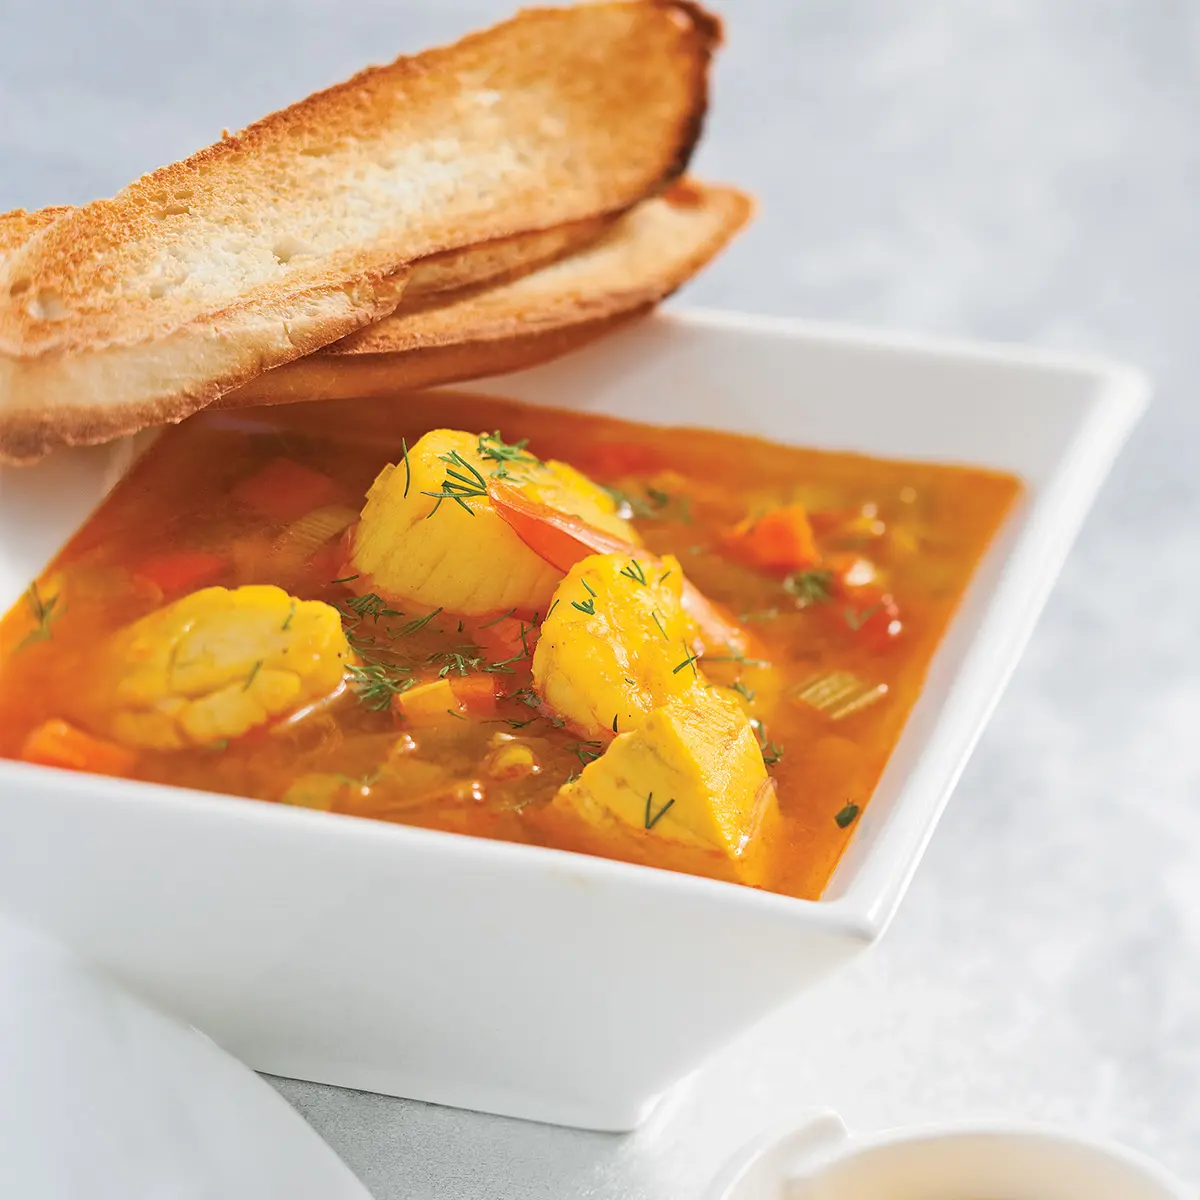 Mediterranean fish soup